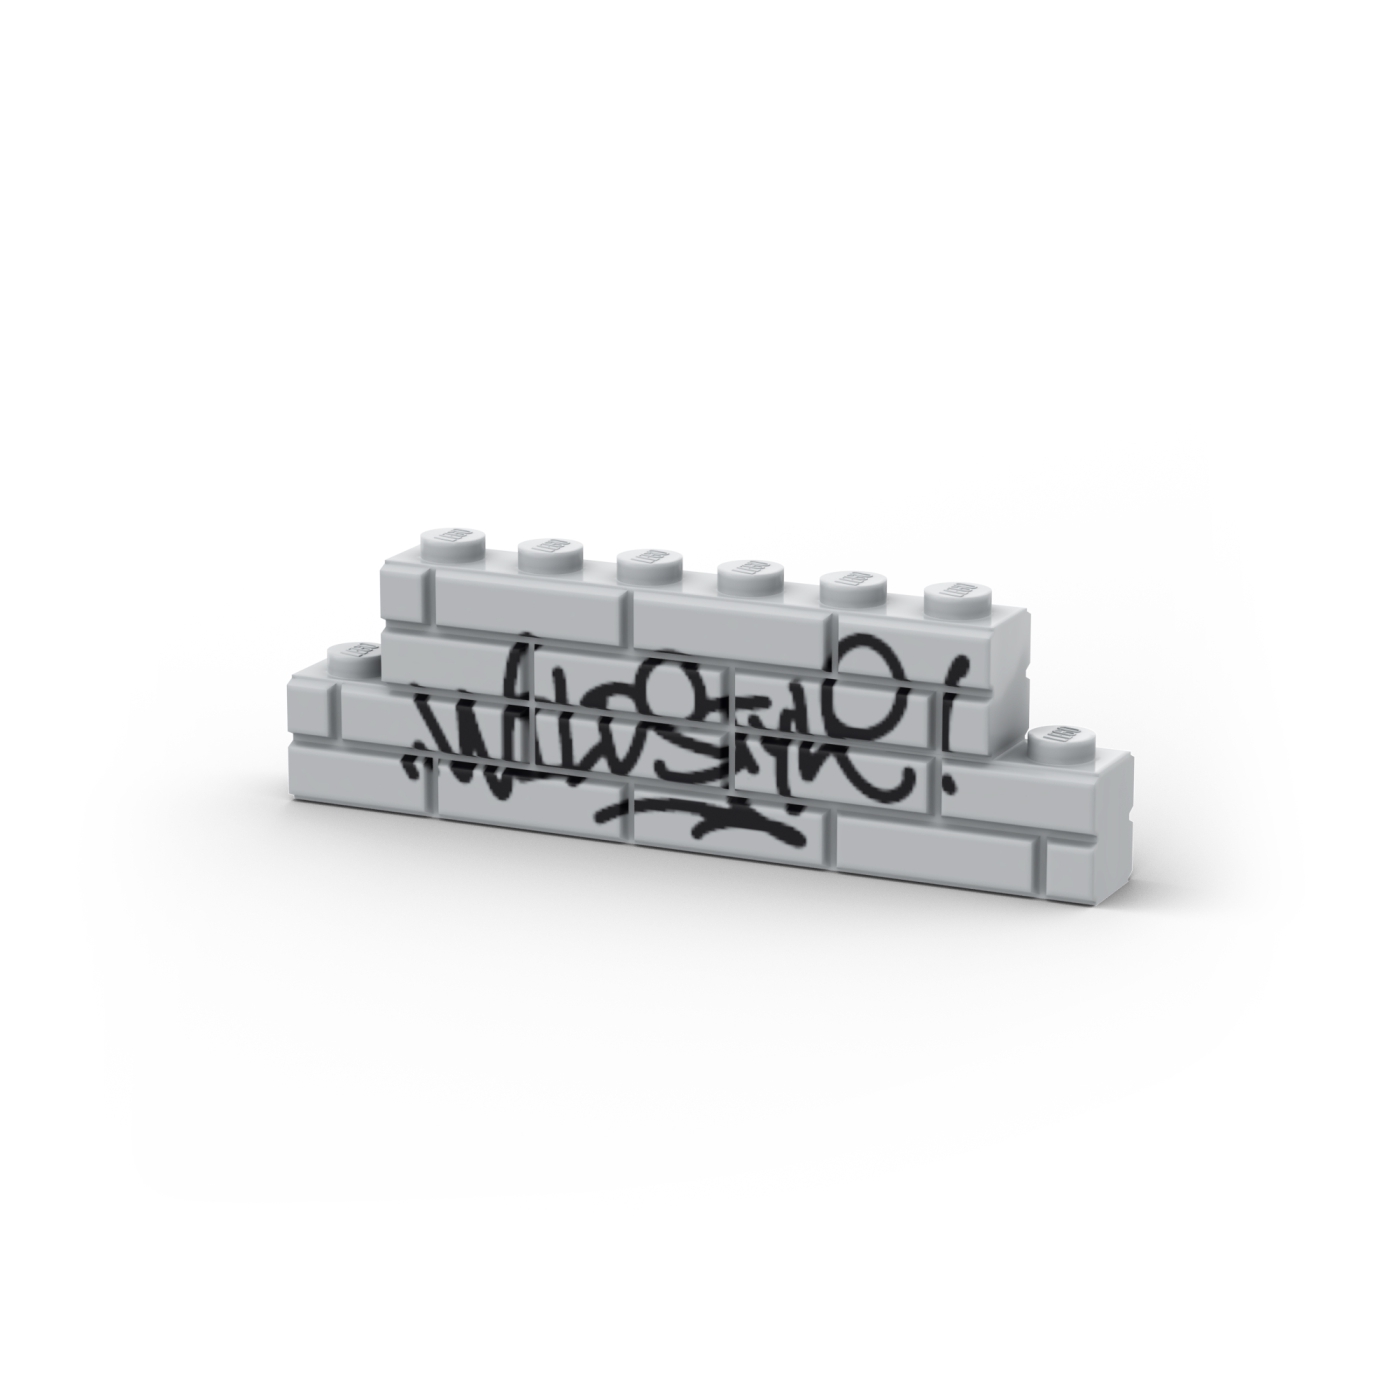 LEGO reveals 712215 Brick Stick adhesive for semi-permanent LEGO